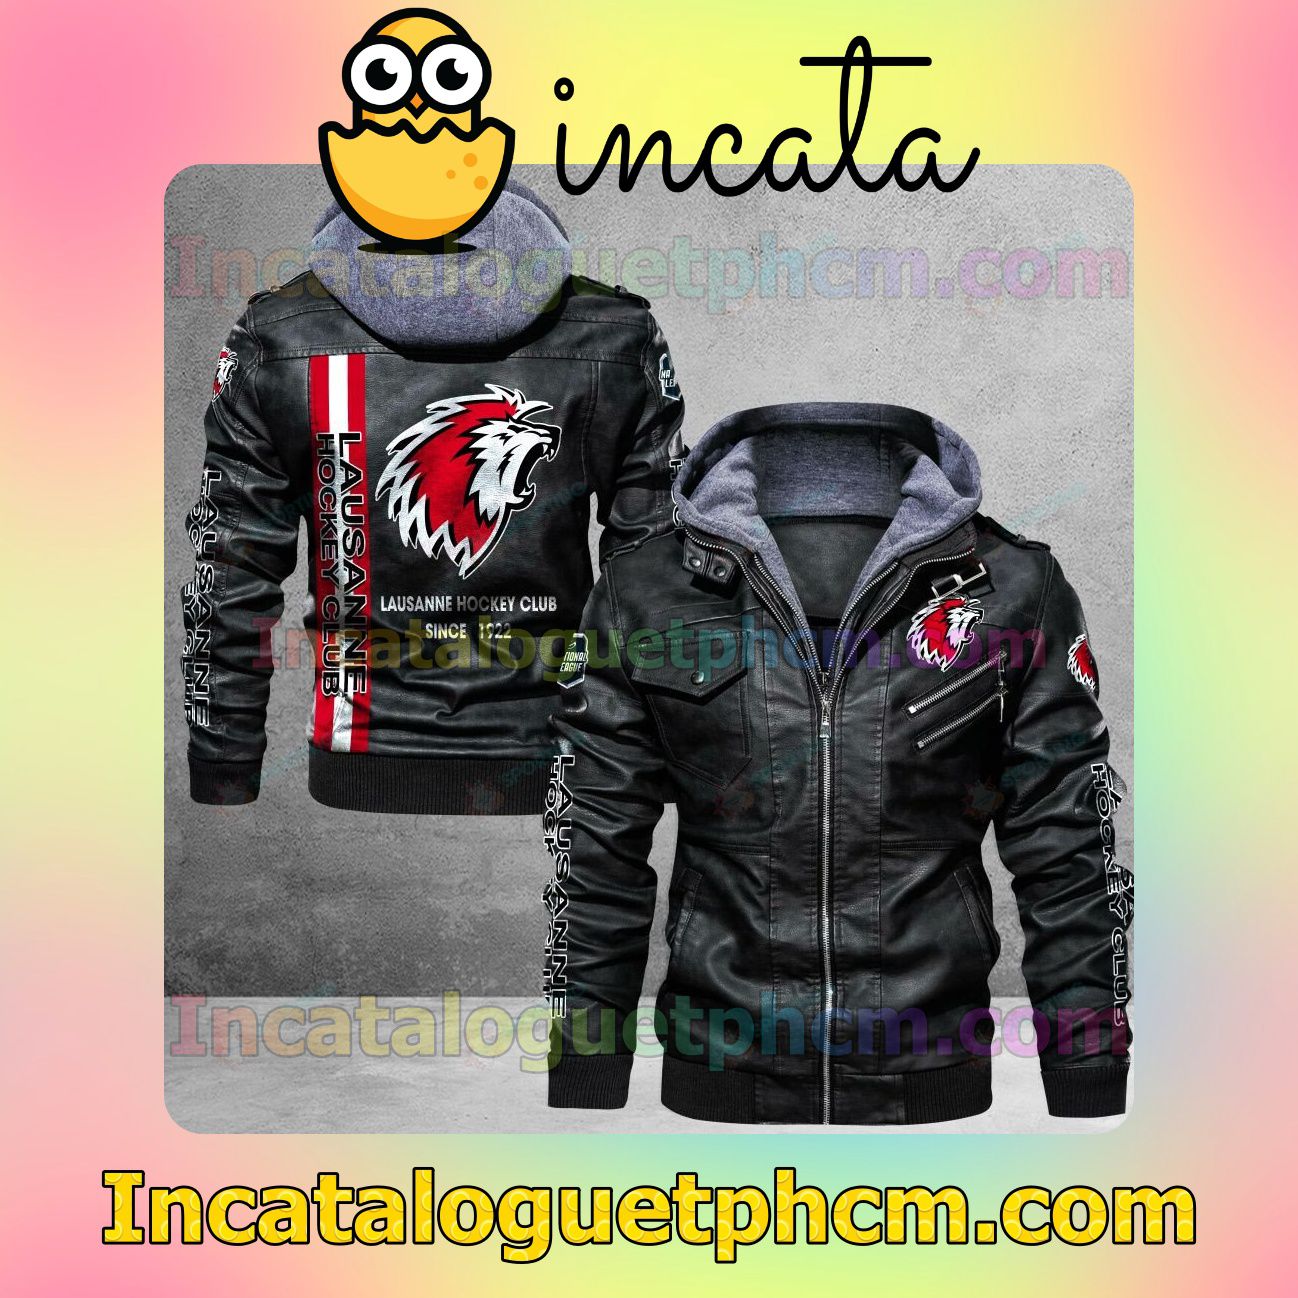 Lausanne Hockey Club Brand Uniform Leather Jacket